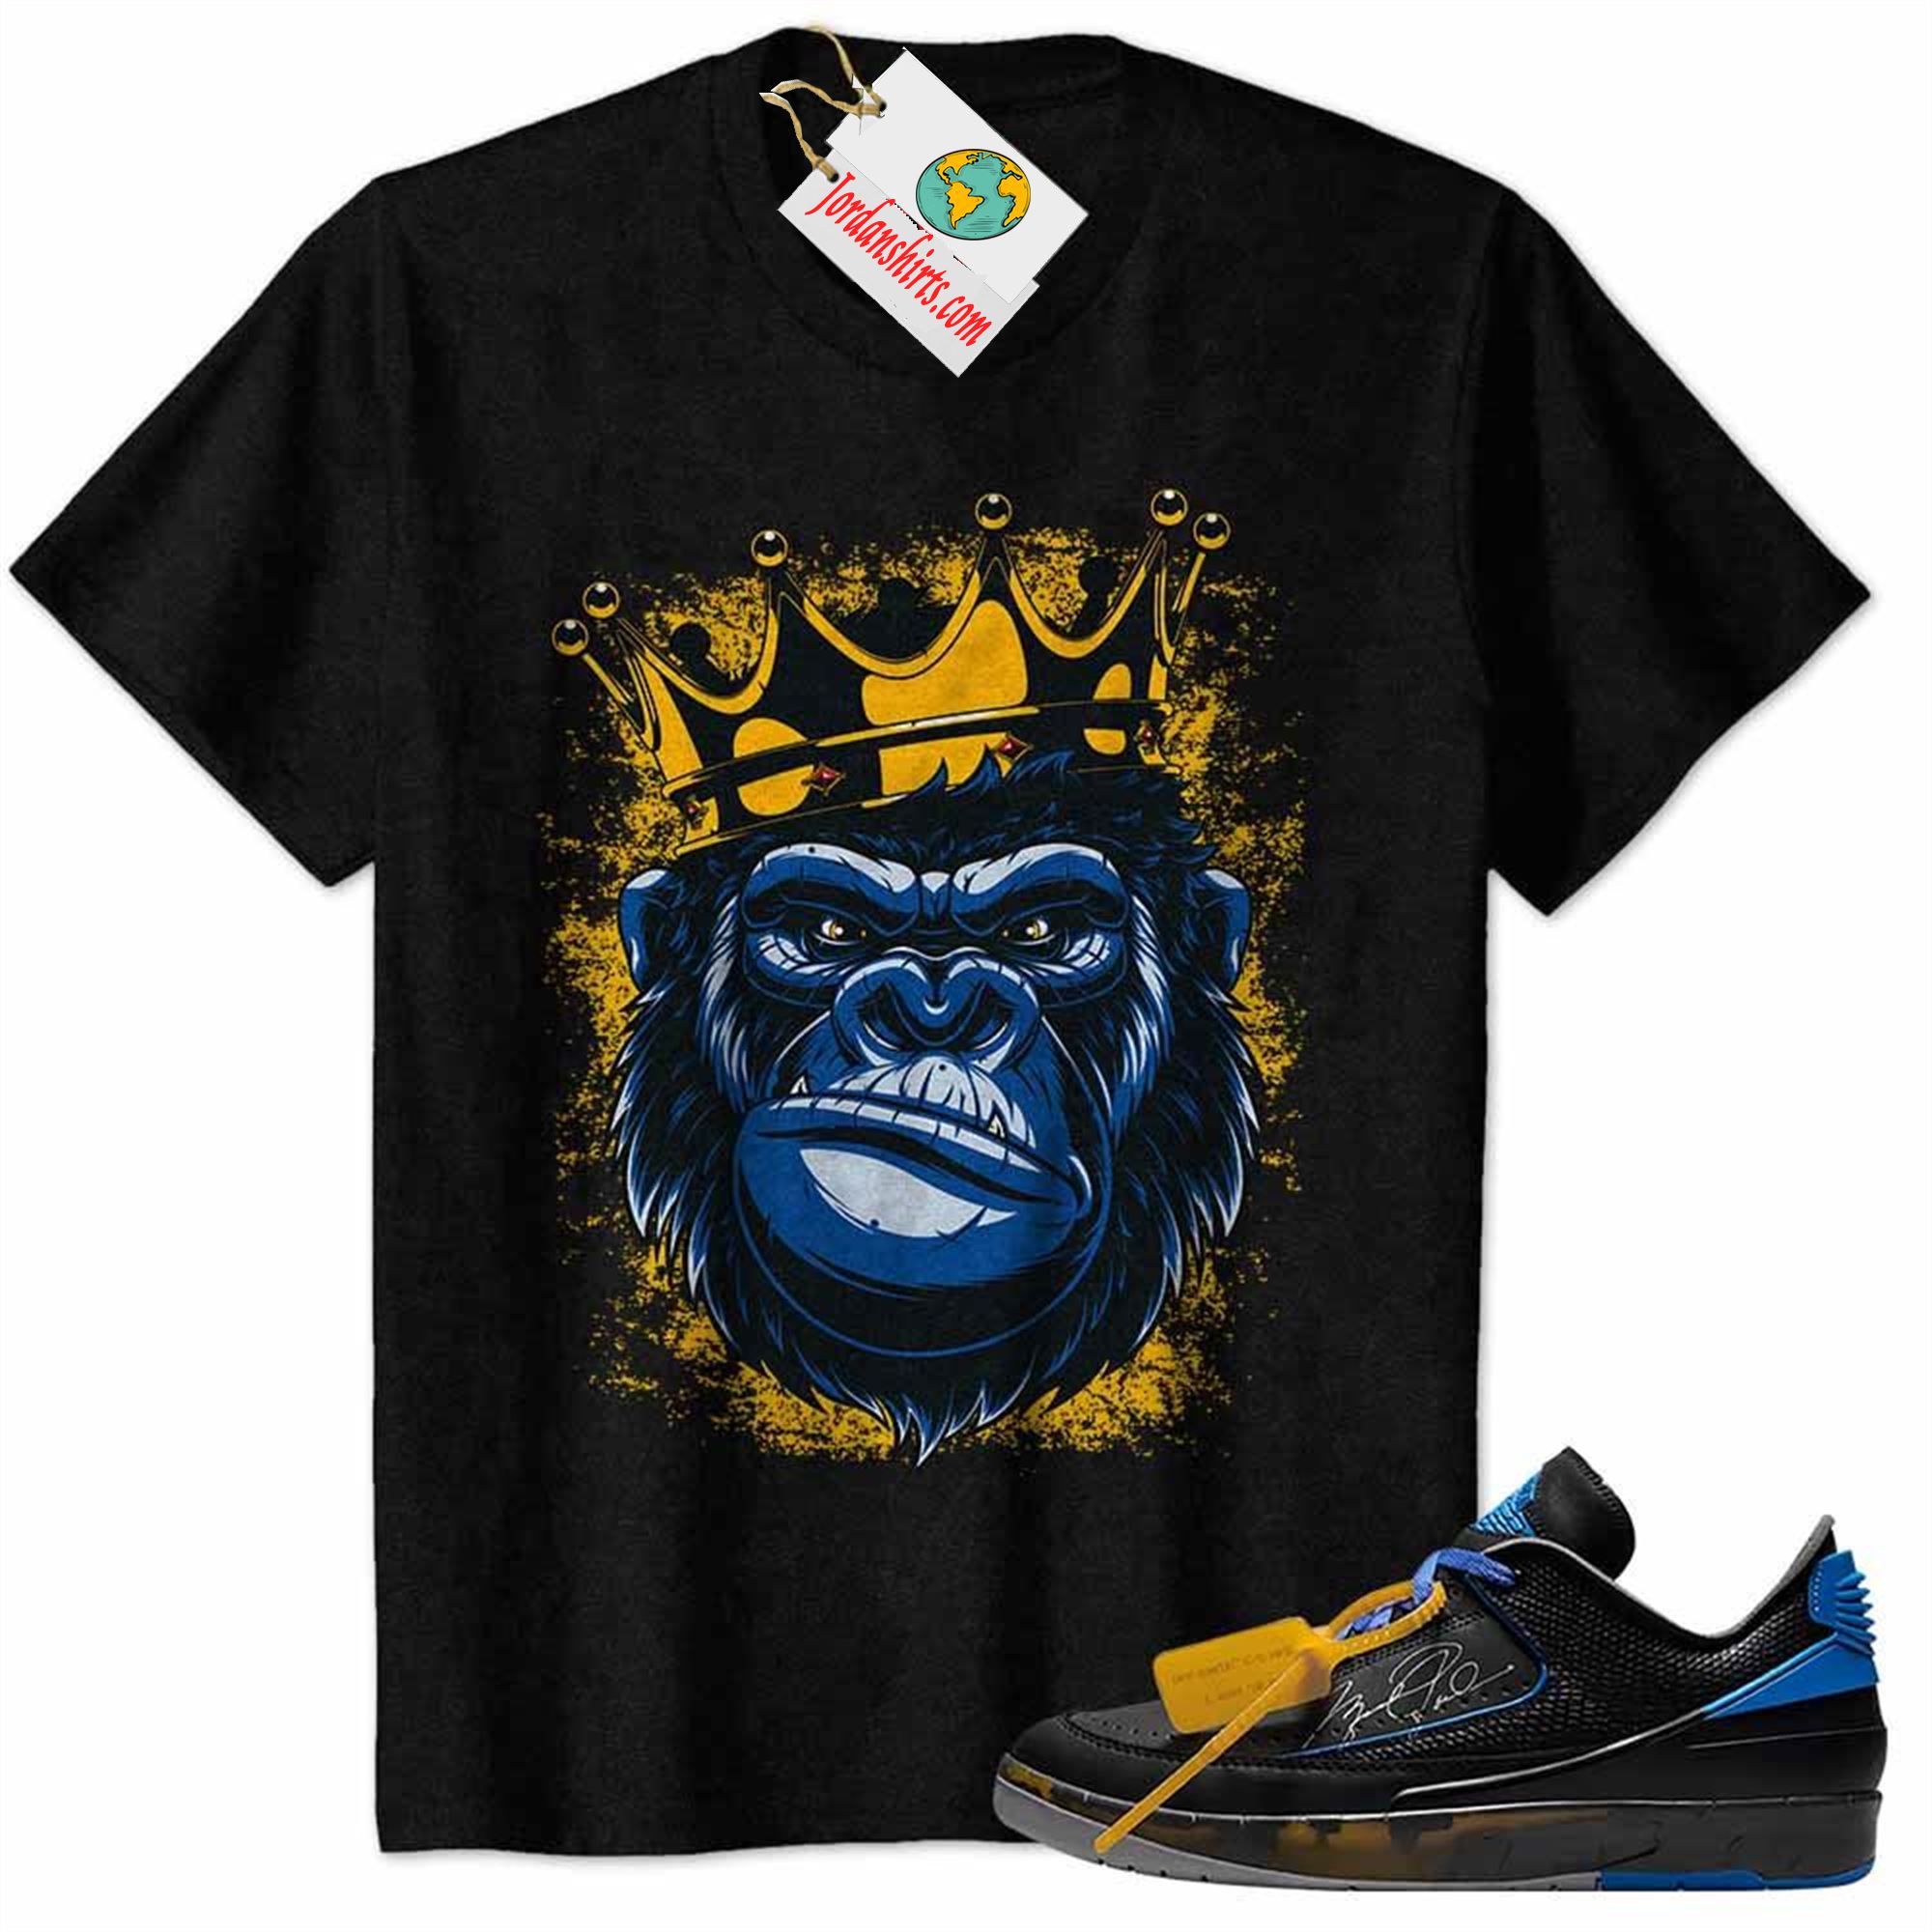 Jordan 2 Shirt, The Gorilla King With Crown Black Air Jordan 2 Low X Off-white Black And Varsity Royal 2s Size Up To 5xl